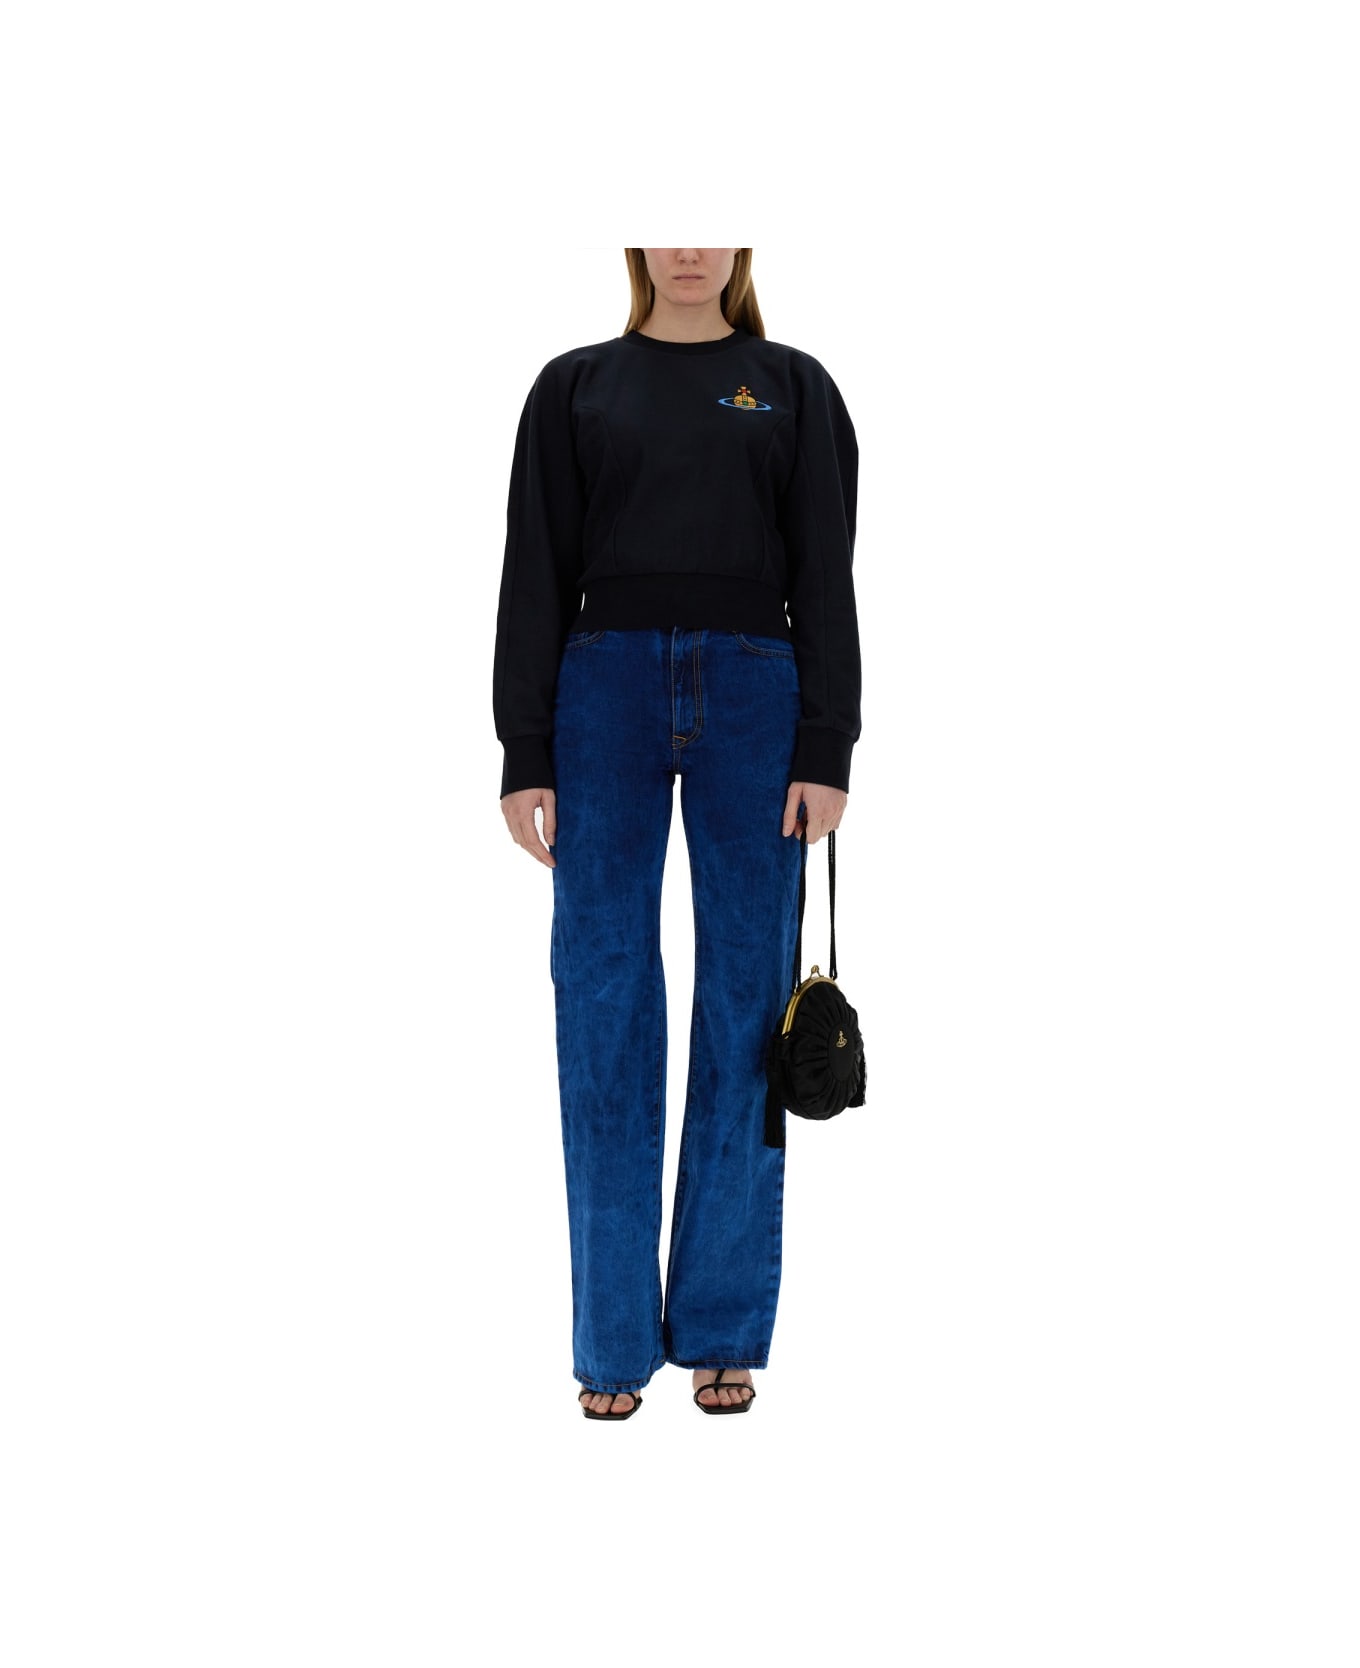 Vivienne Westwood Sweatshirt "cynthia" - BLUE